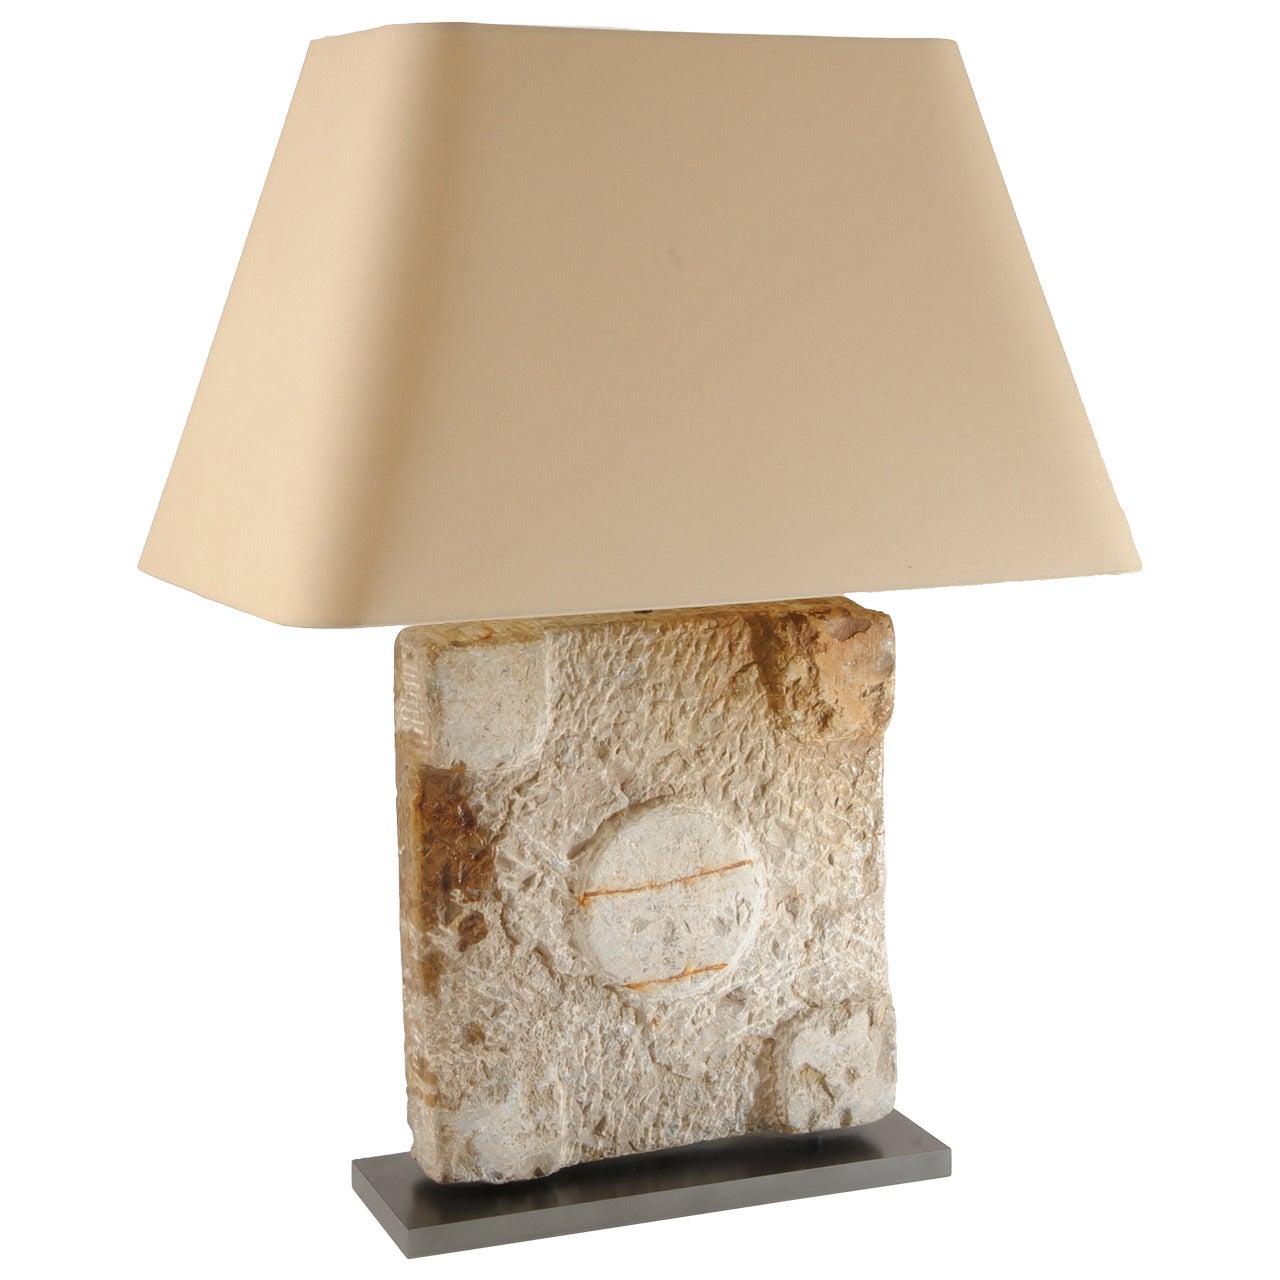 Stone Architectural Element, Roman Column Base Lamp For Sale